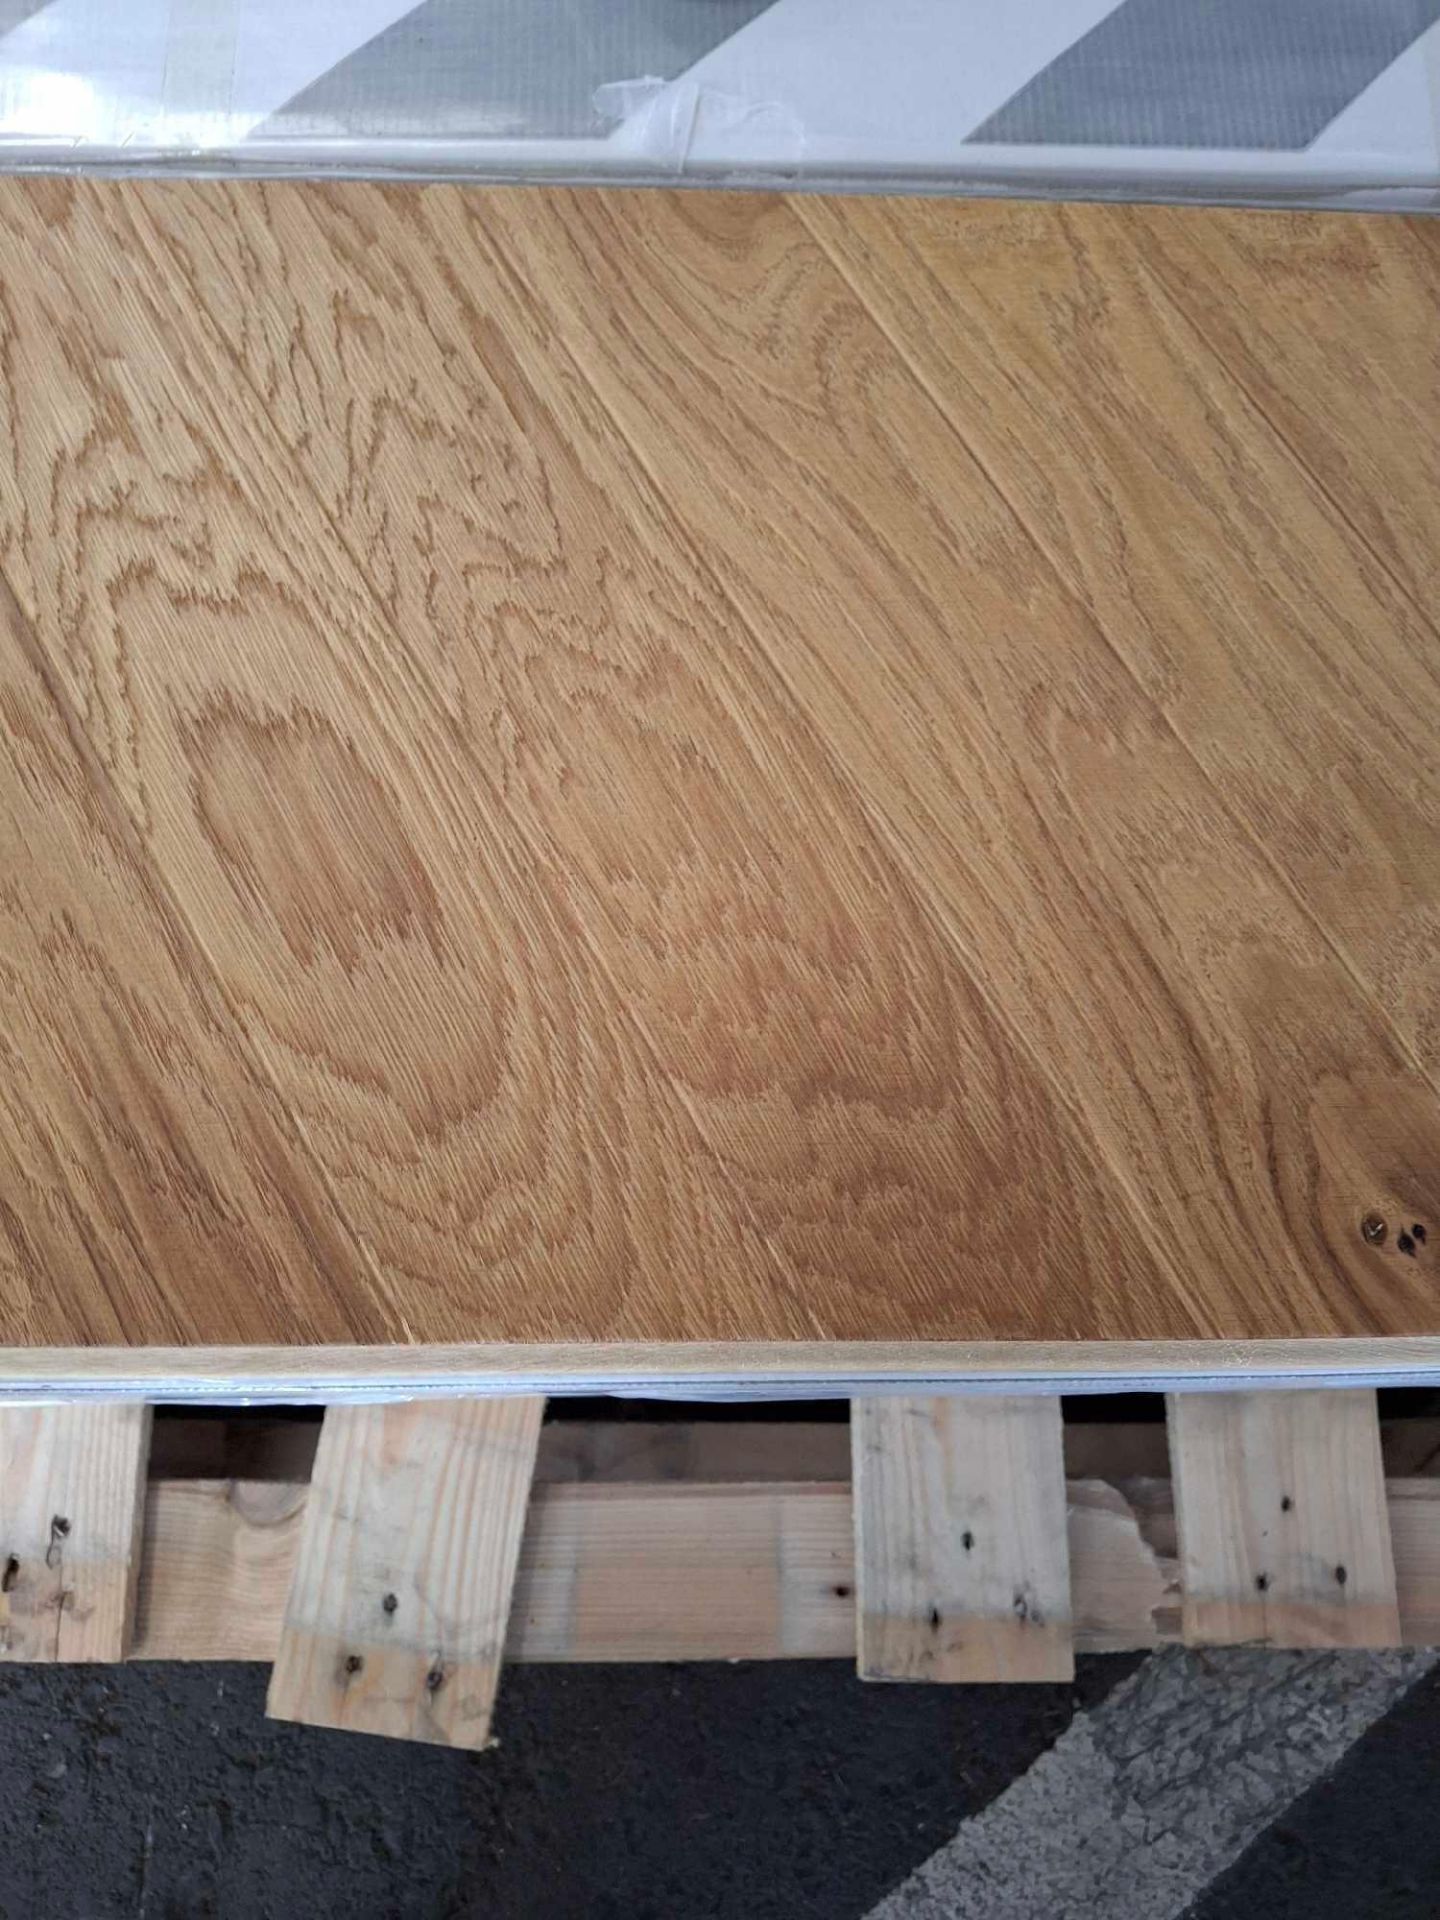 6 Packs of KÃ¤hrs Wood Flooring Chevron Light Brown Oiled 1848mm x 305mm x 15mm Per Plank 4 Per Pack - Image 2 of 5